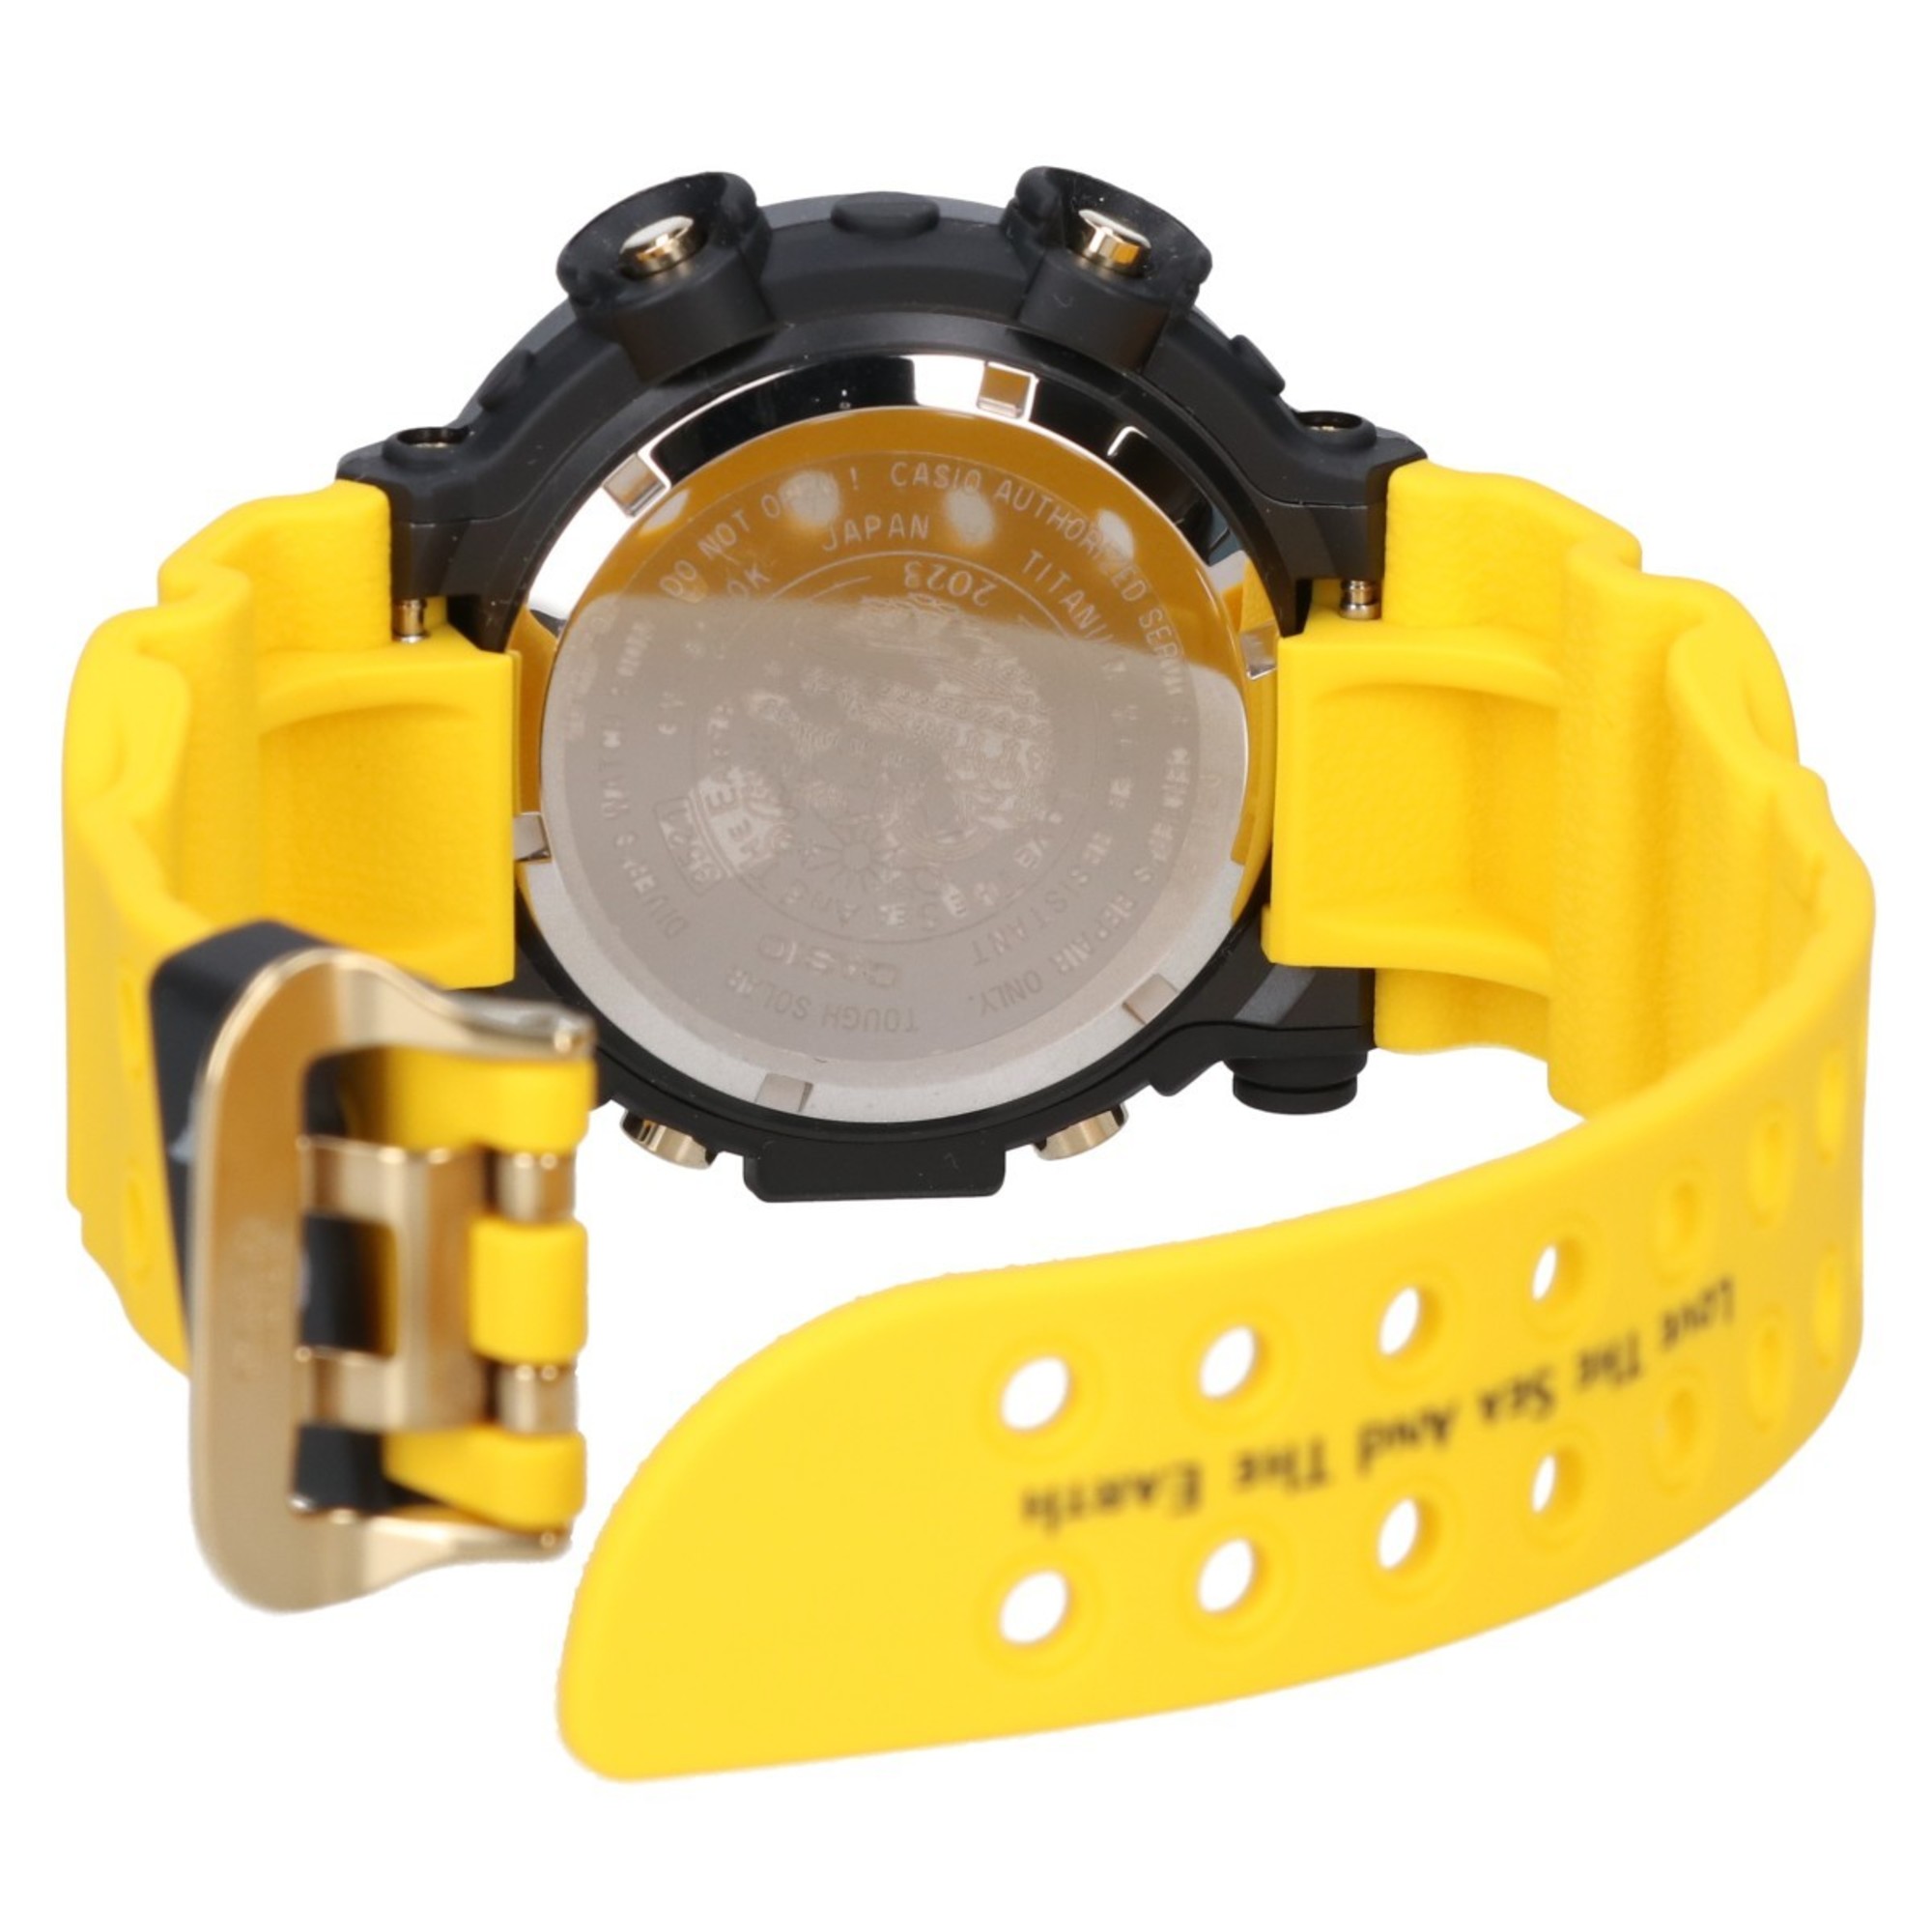 CASIO G-SHOCK GW-8200K-9JR Isearch Japan Collaboration Model MASTER OF G-SEA FROGMAN Tough Solar Watch Black Yellow Men's